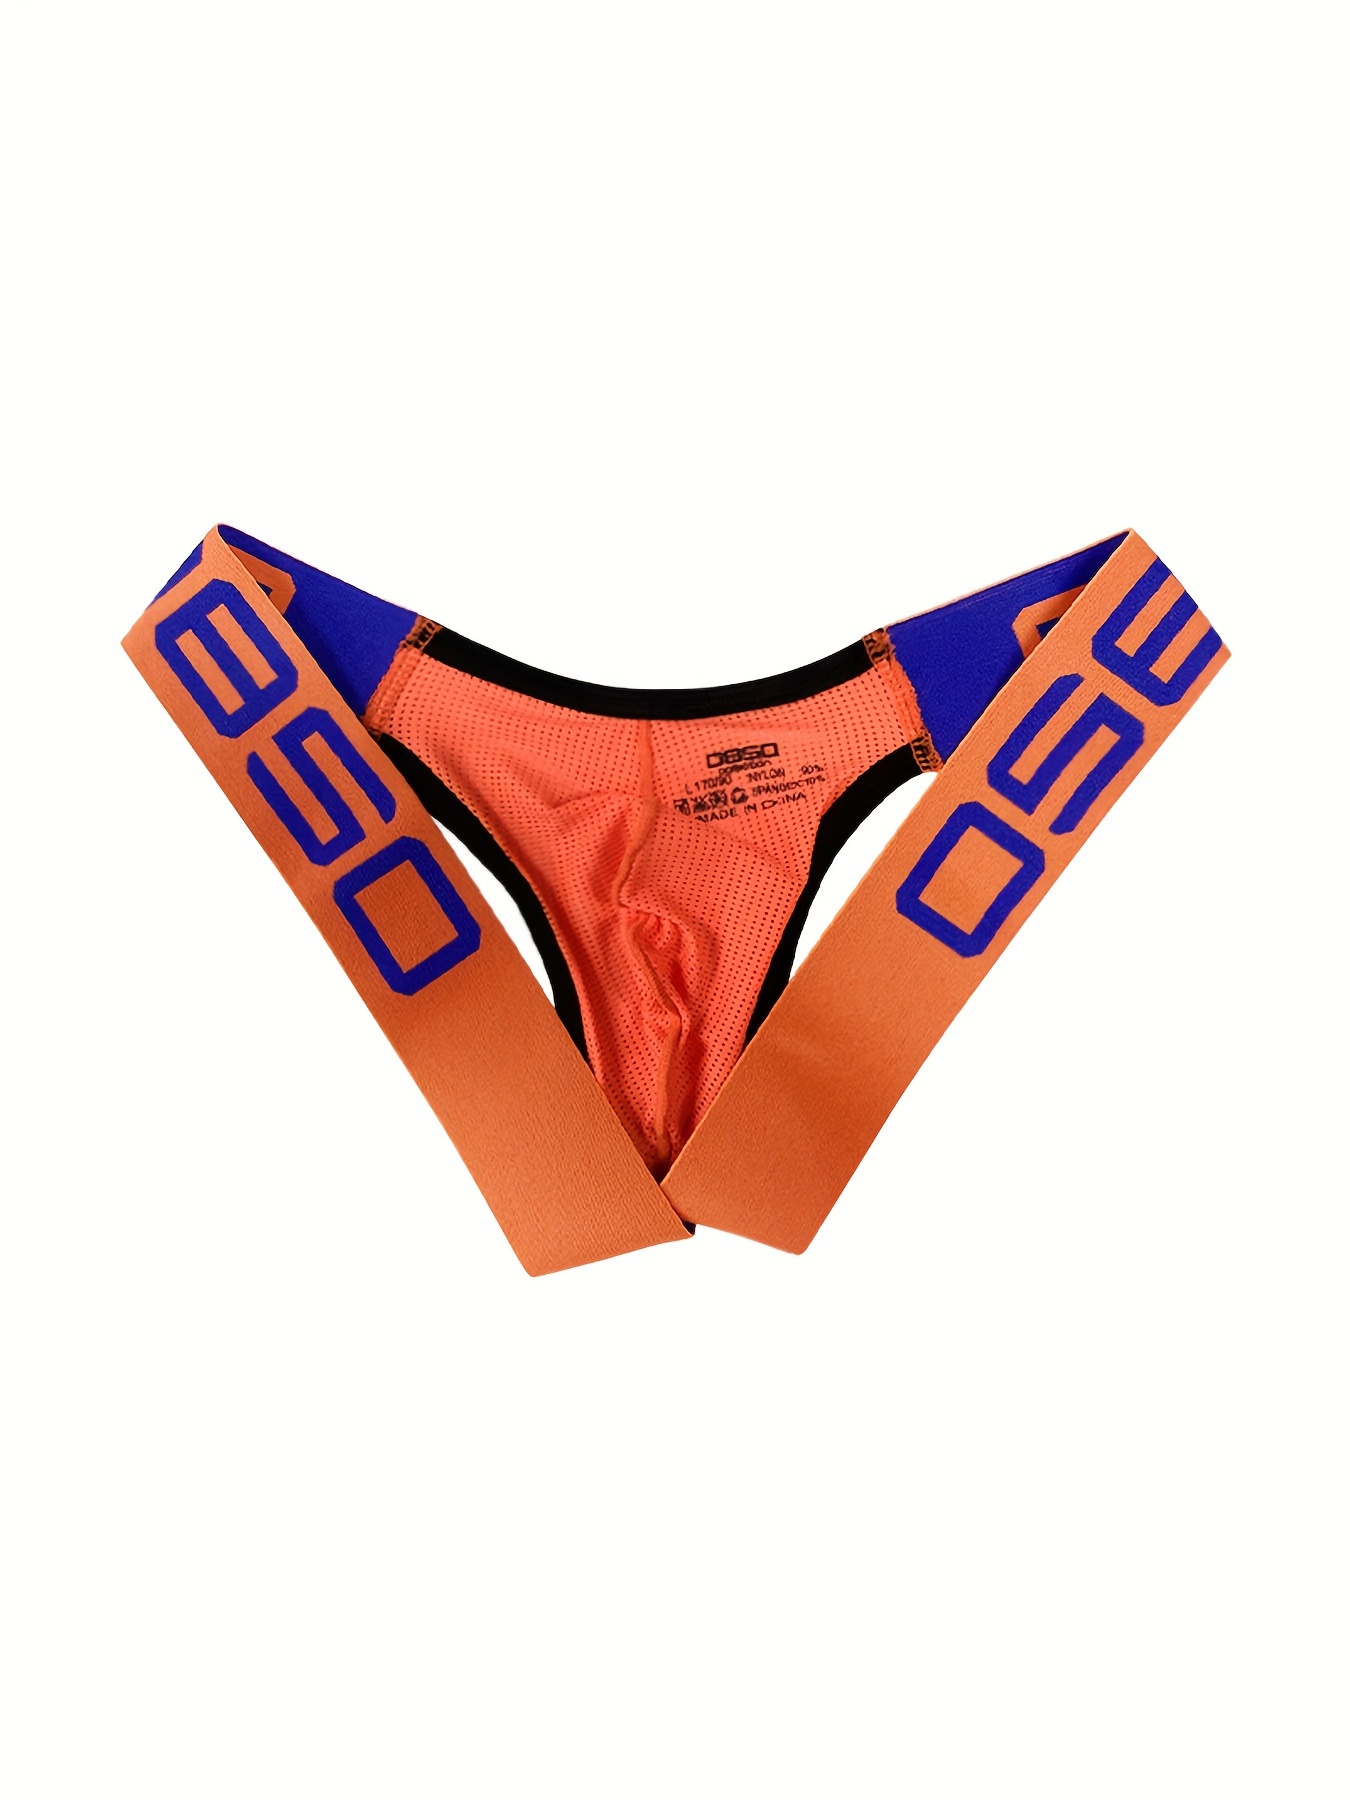 Men's Funny Underwear Bikini G-String T-Back Bulge Pouch Jockstrap